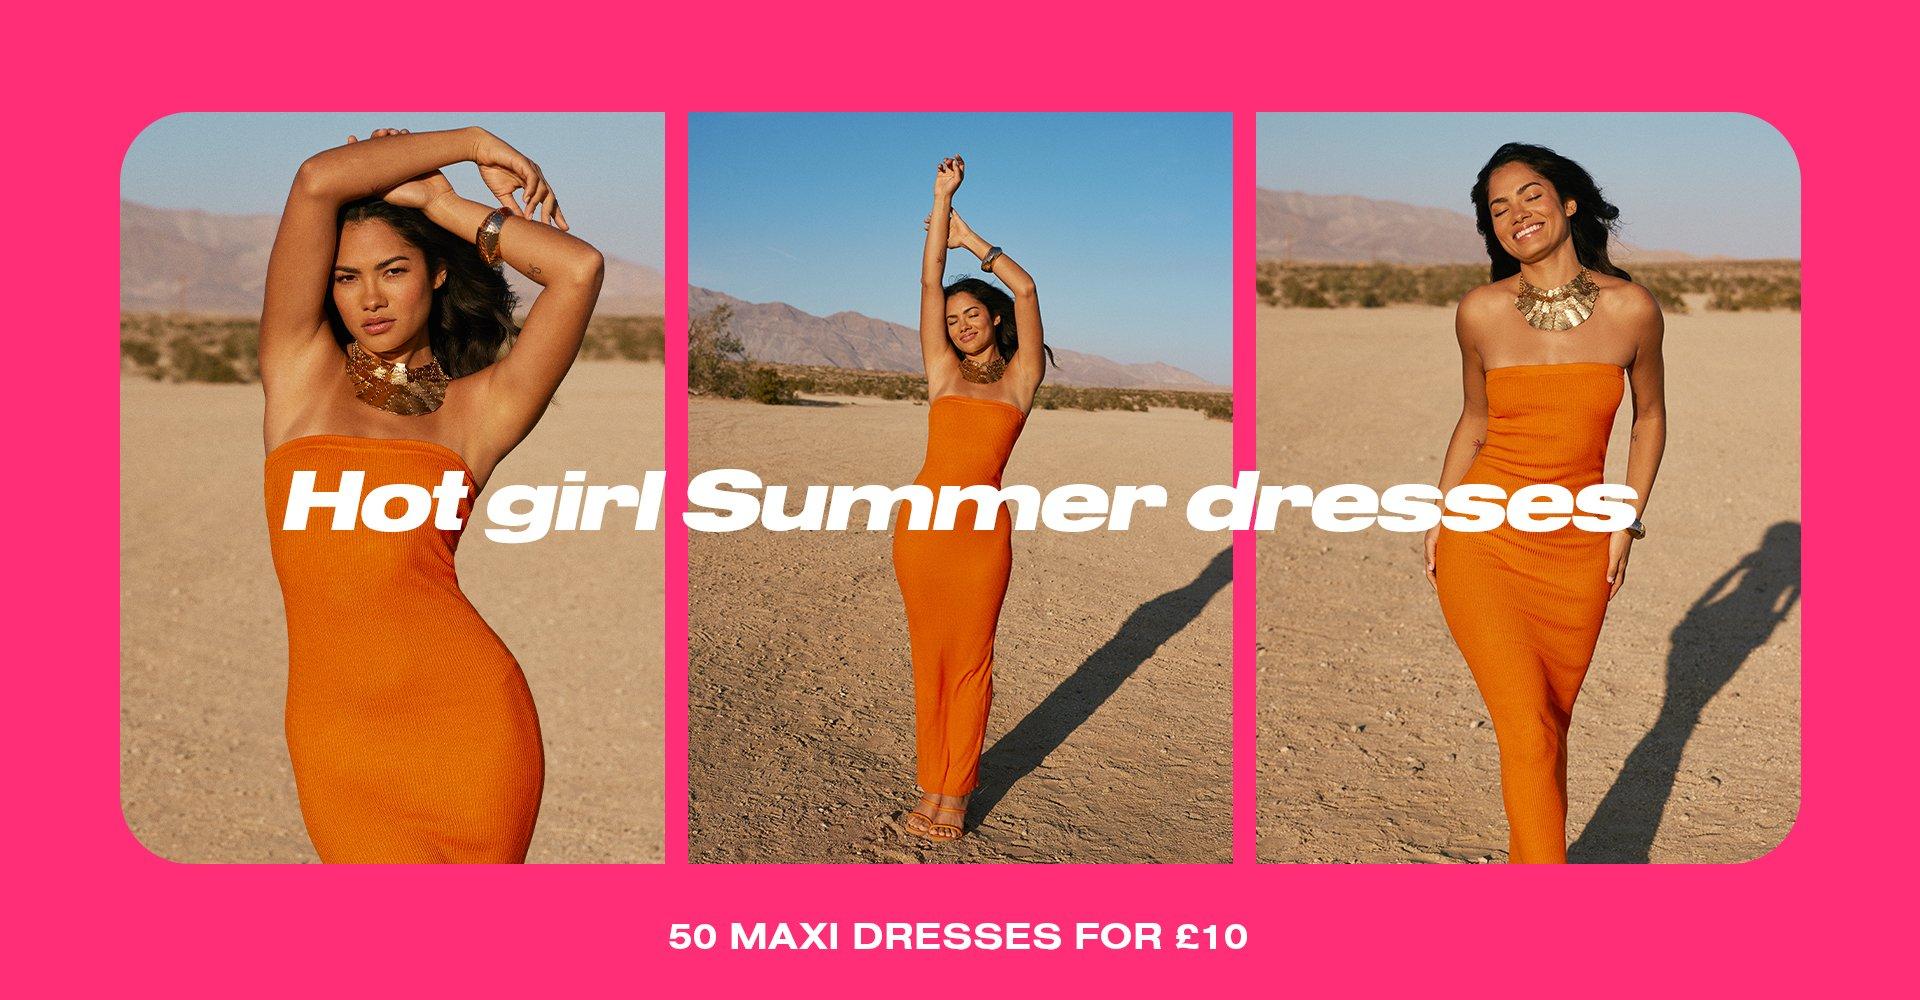 HOT GIRL SUMMER DRESSES 50 MAXI DRESS FOR £10